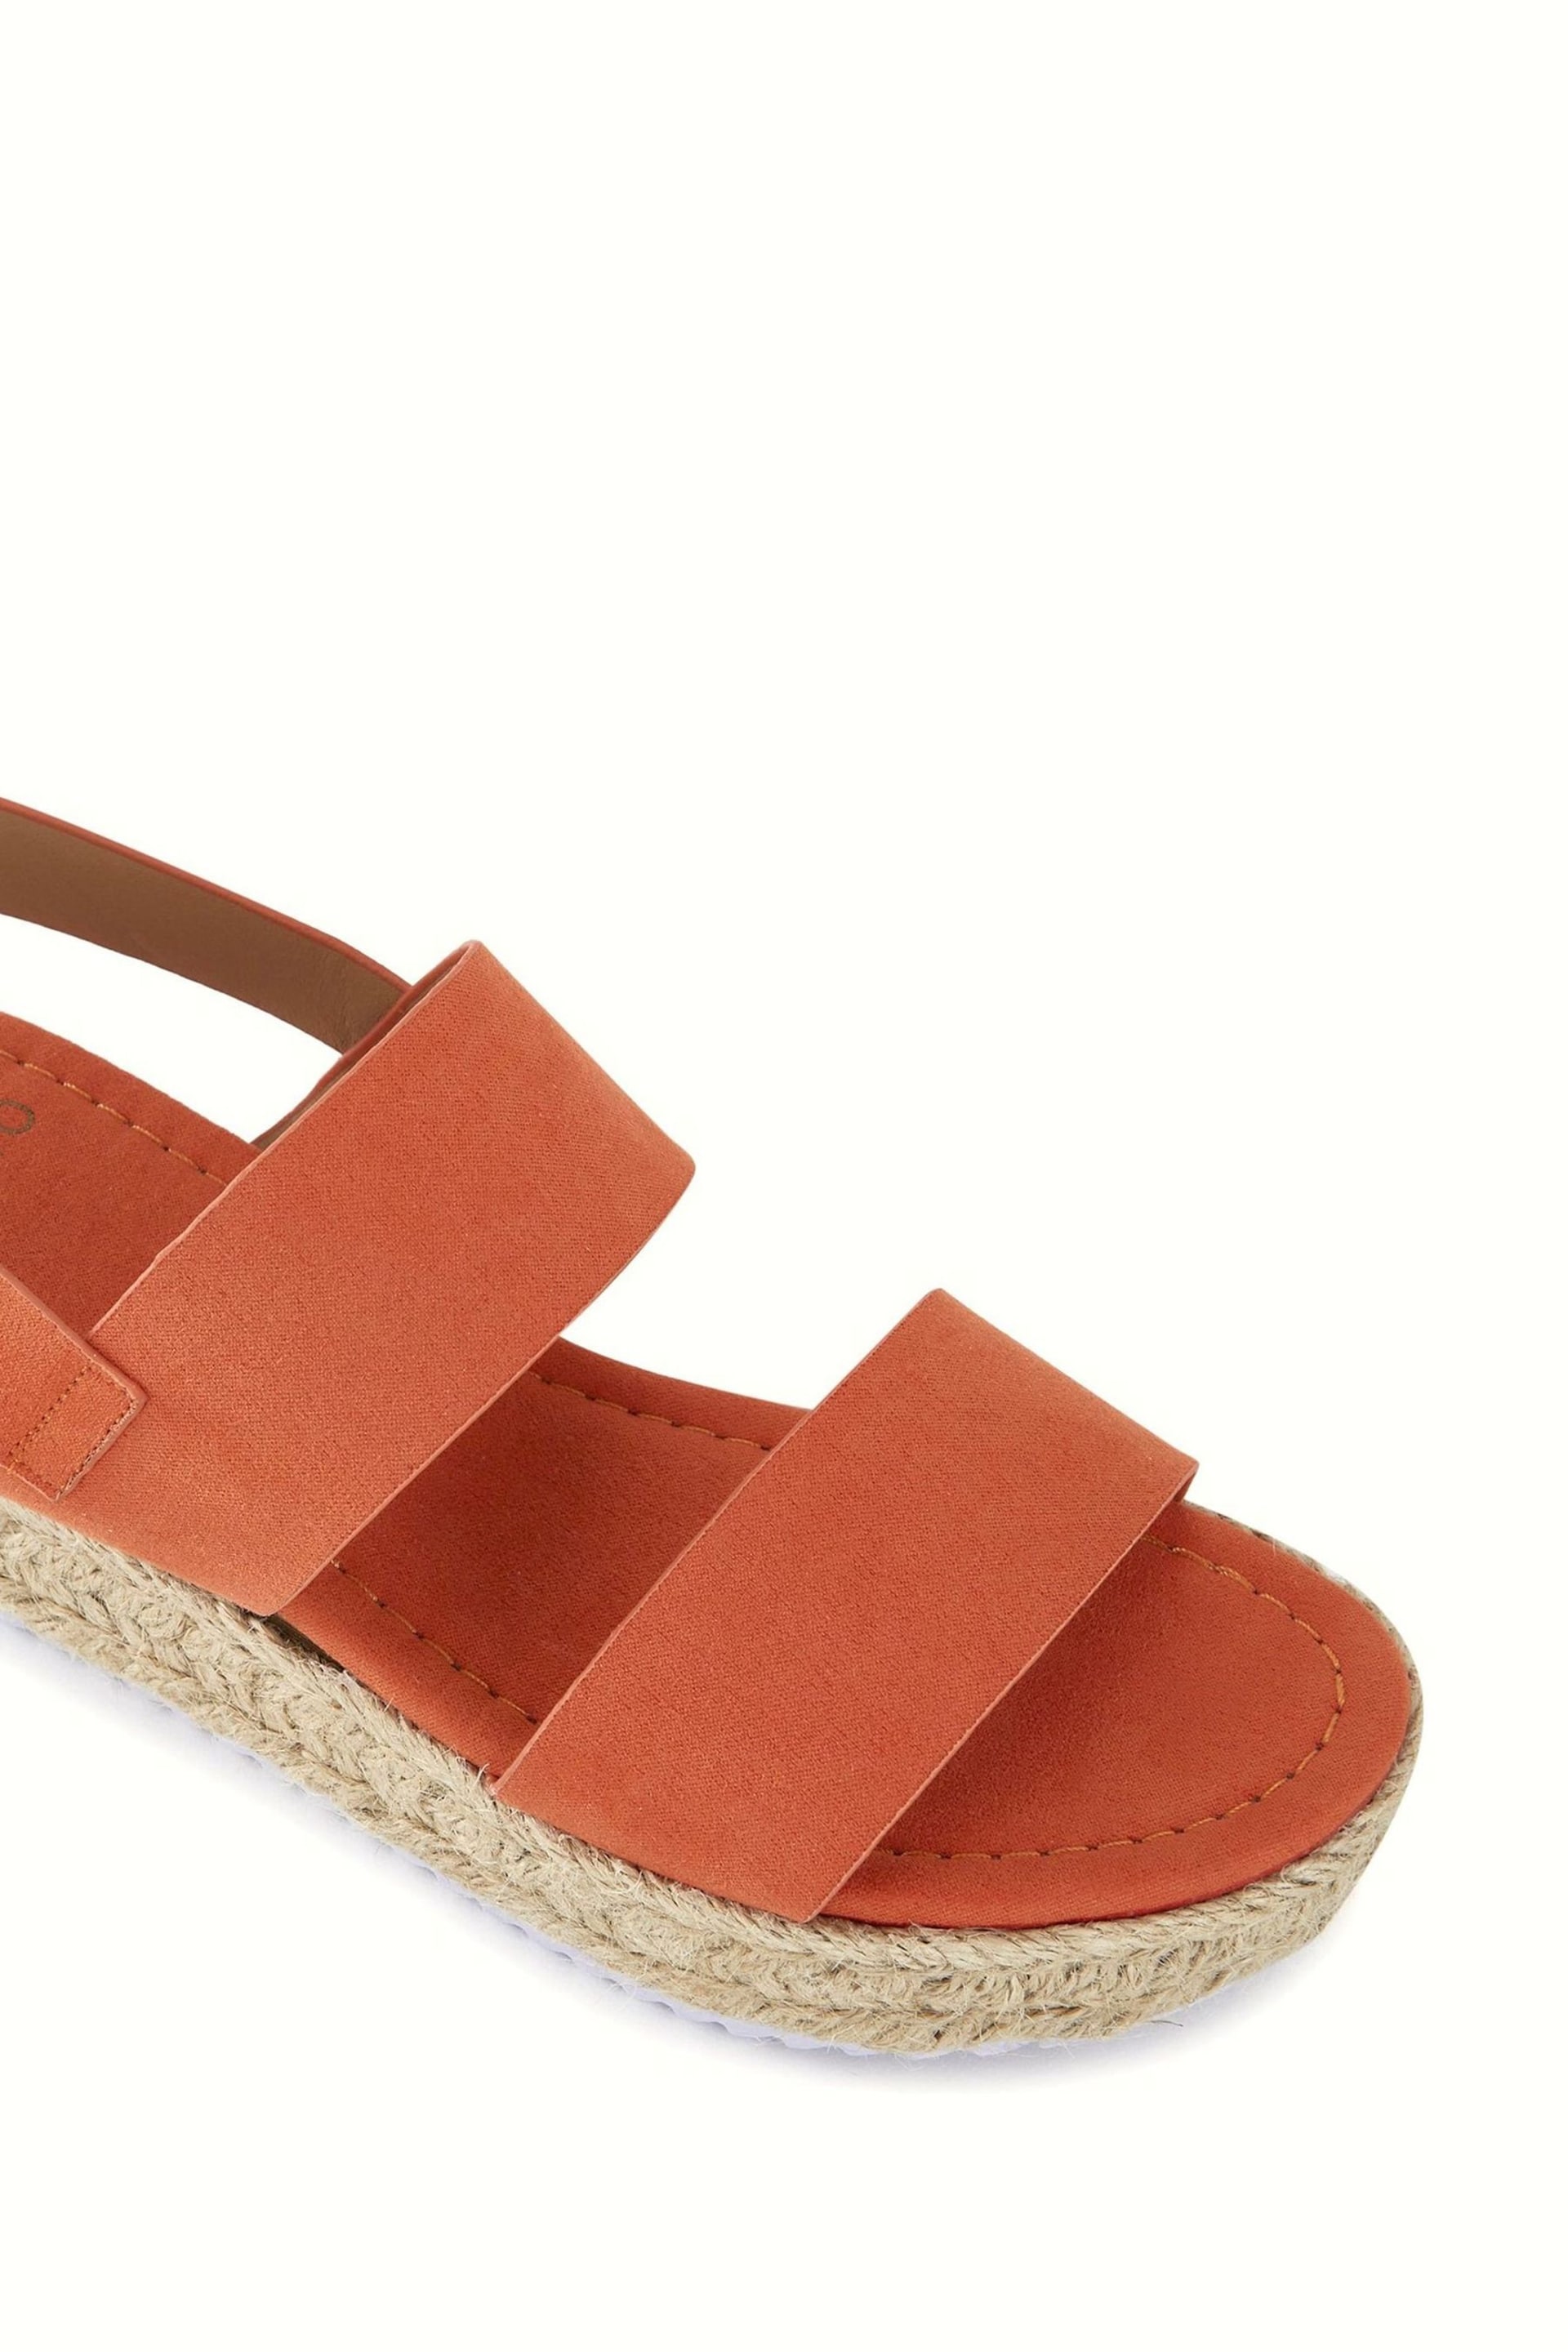 Novo Orange Wide Fit Sadie Espadrille Double Strap Sandals - Image 4 of 6